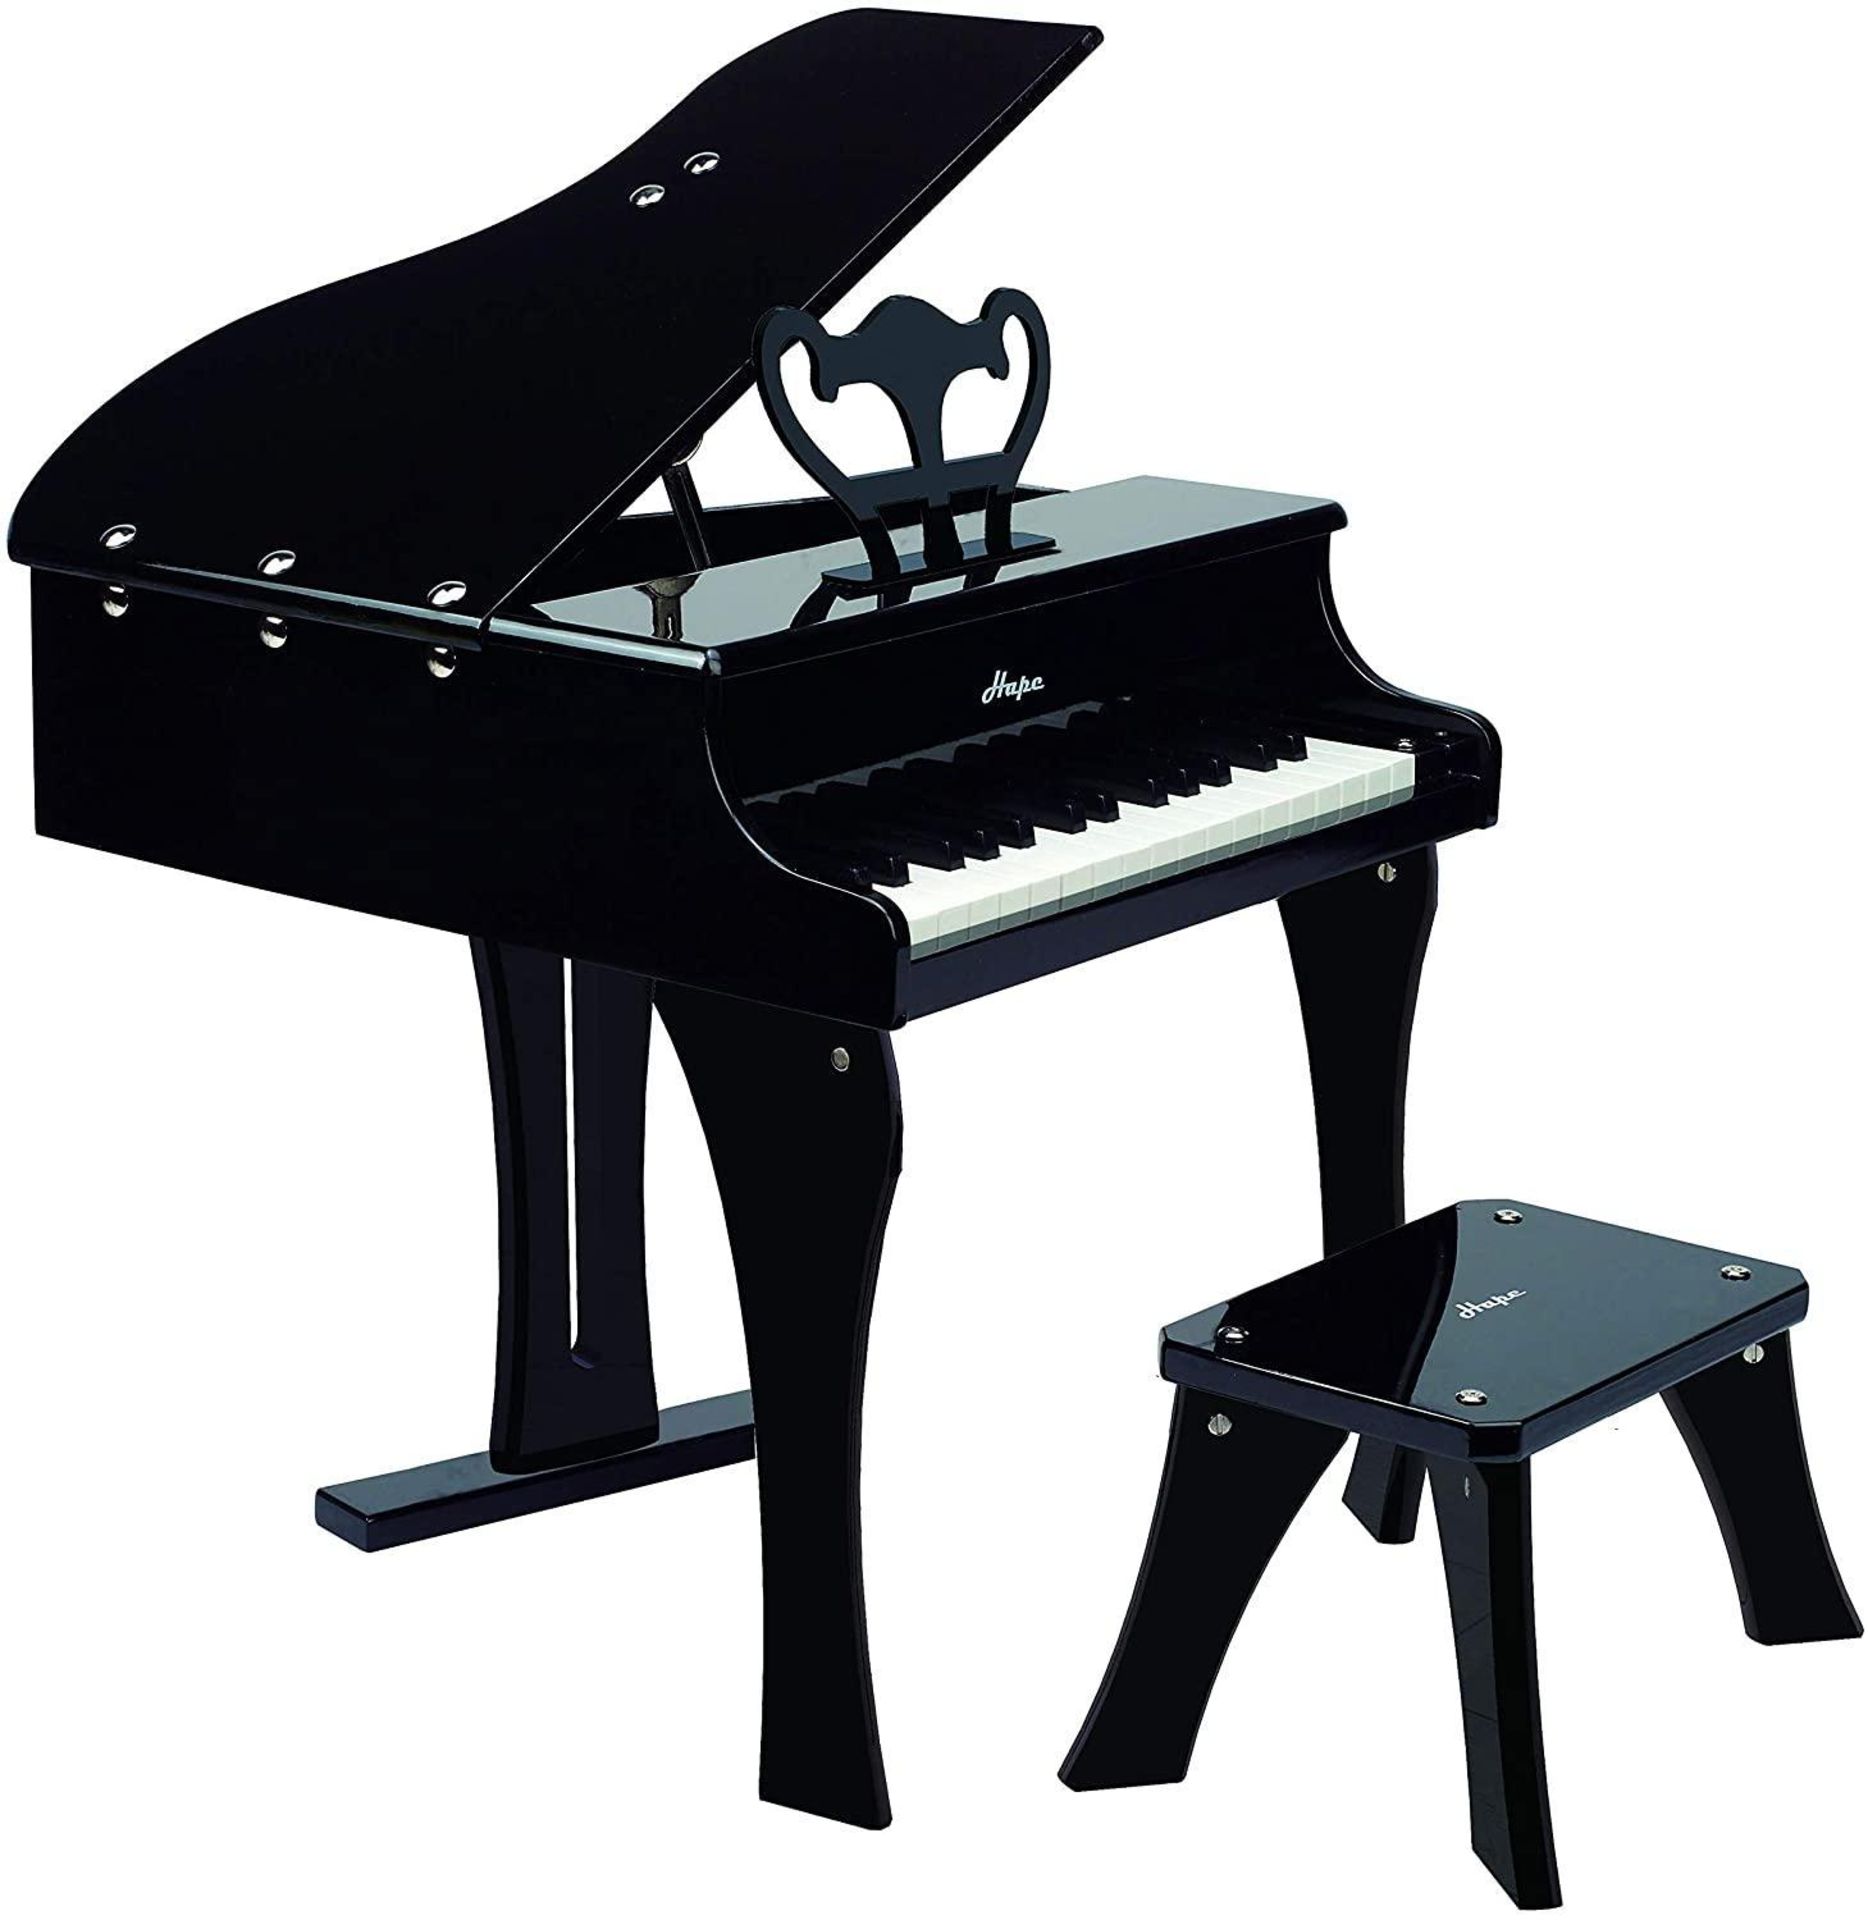 Hape Happy Grand Piano Black £124.99 RRP